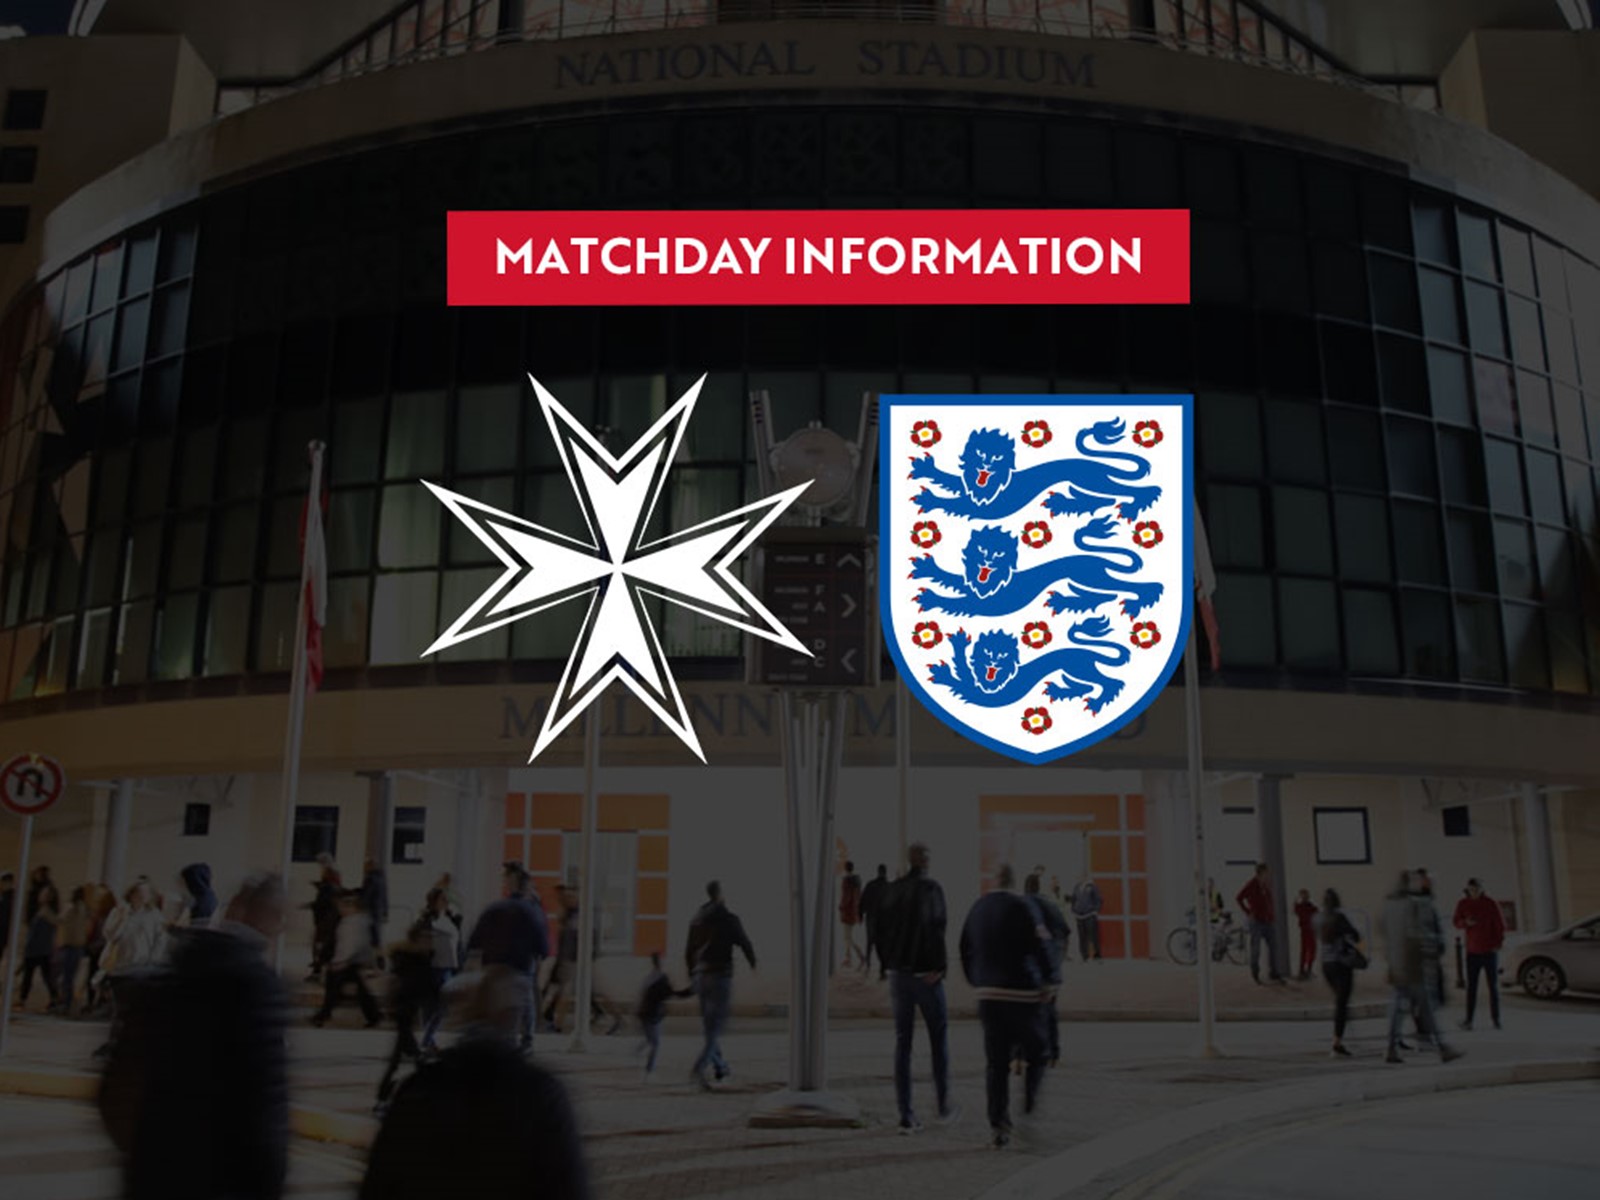 Malta vs England Information for ticket holders